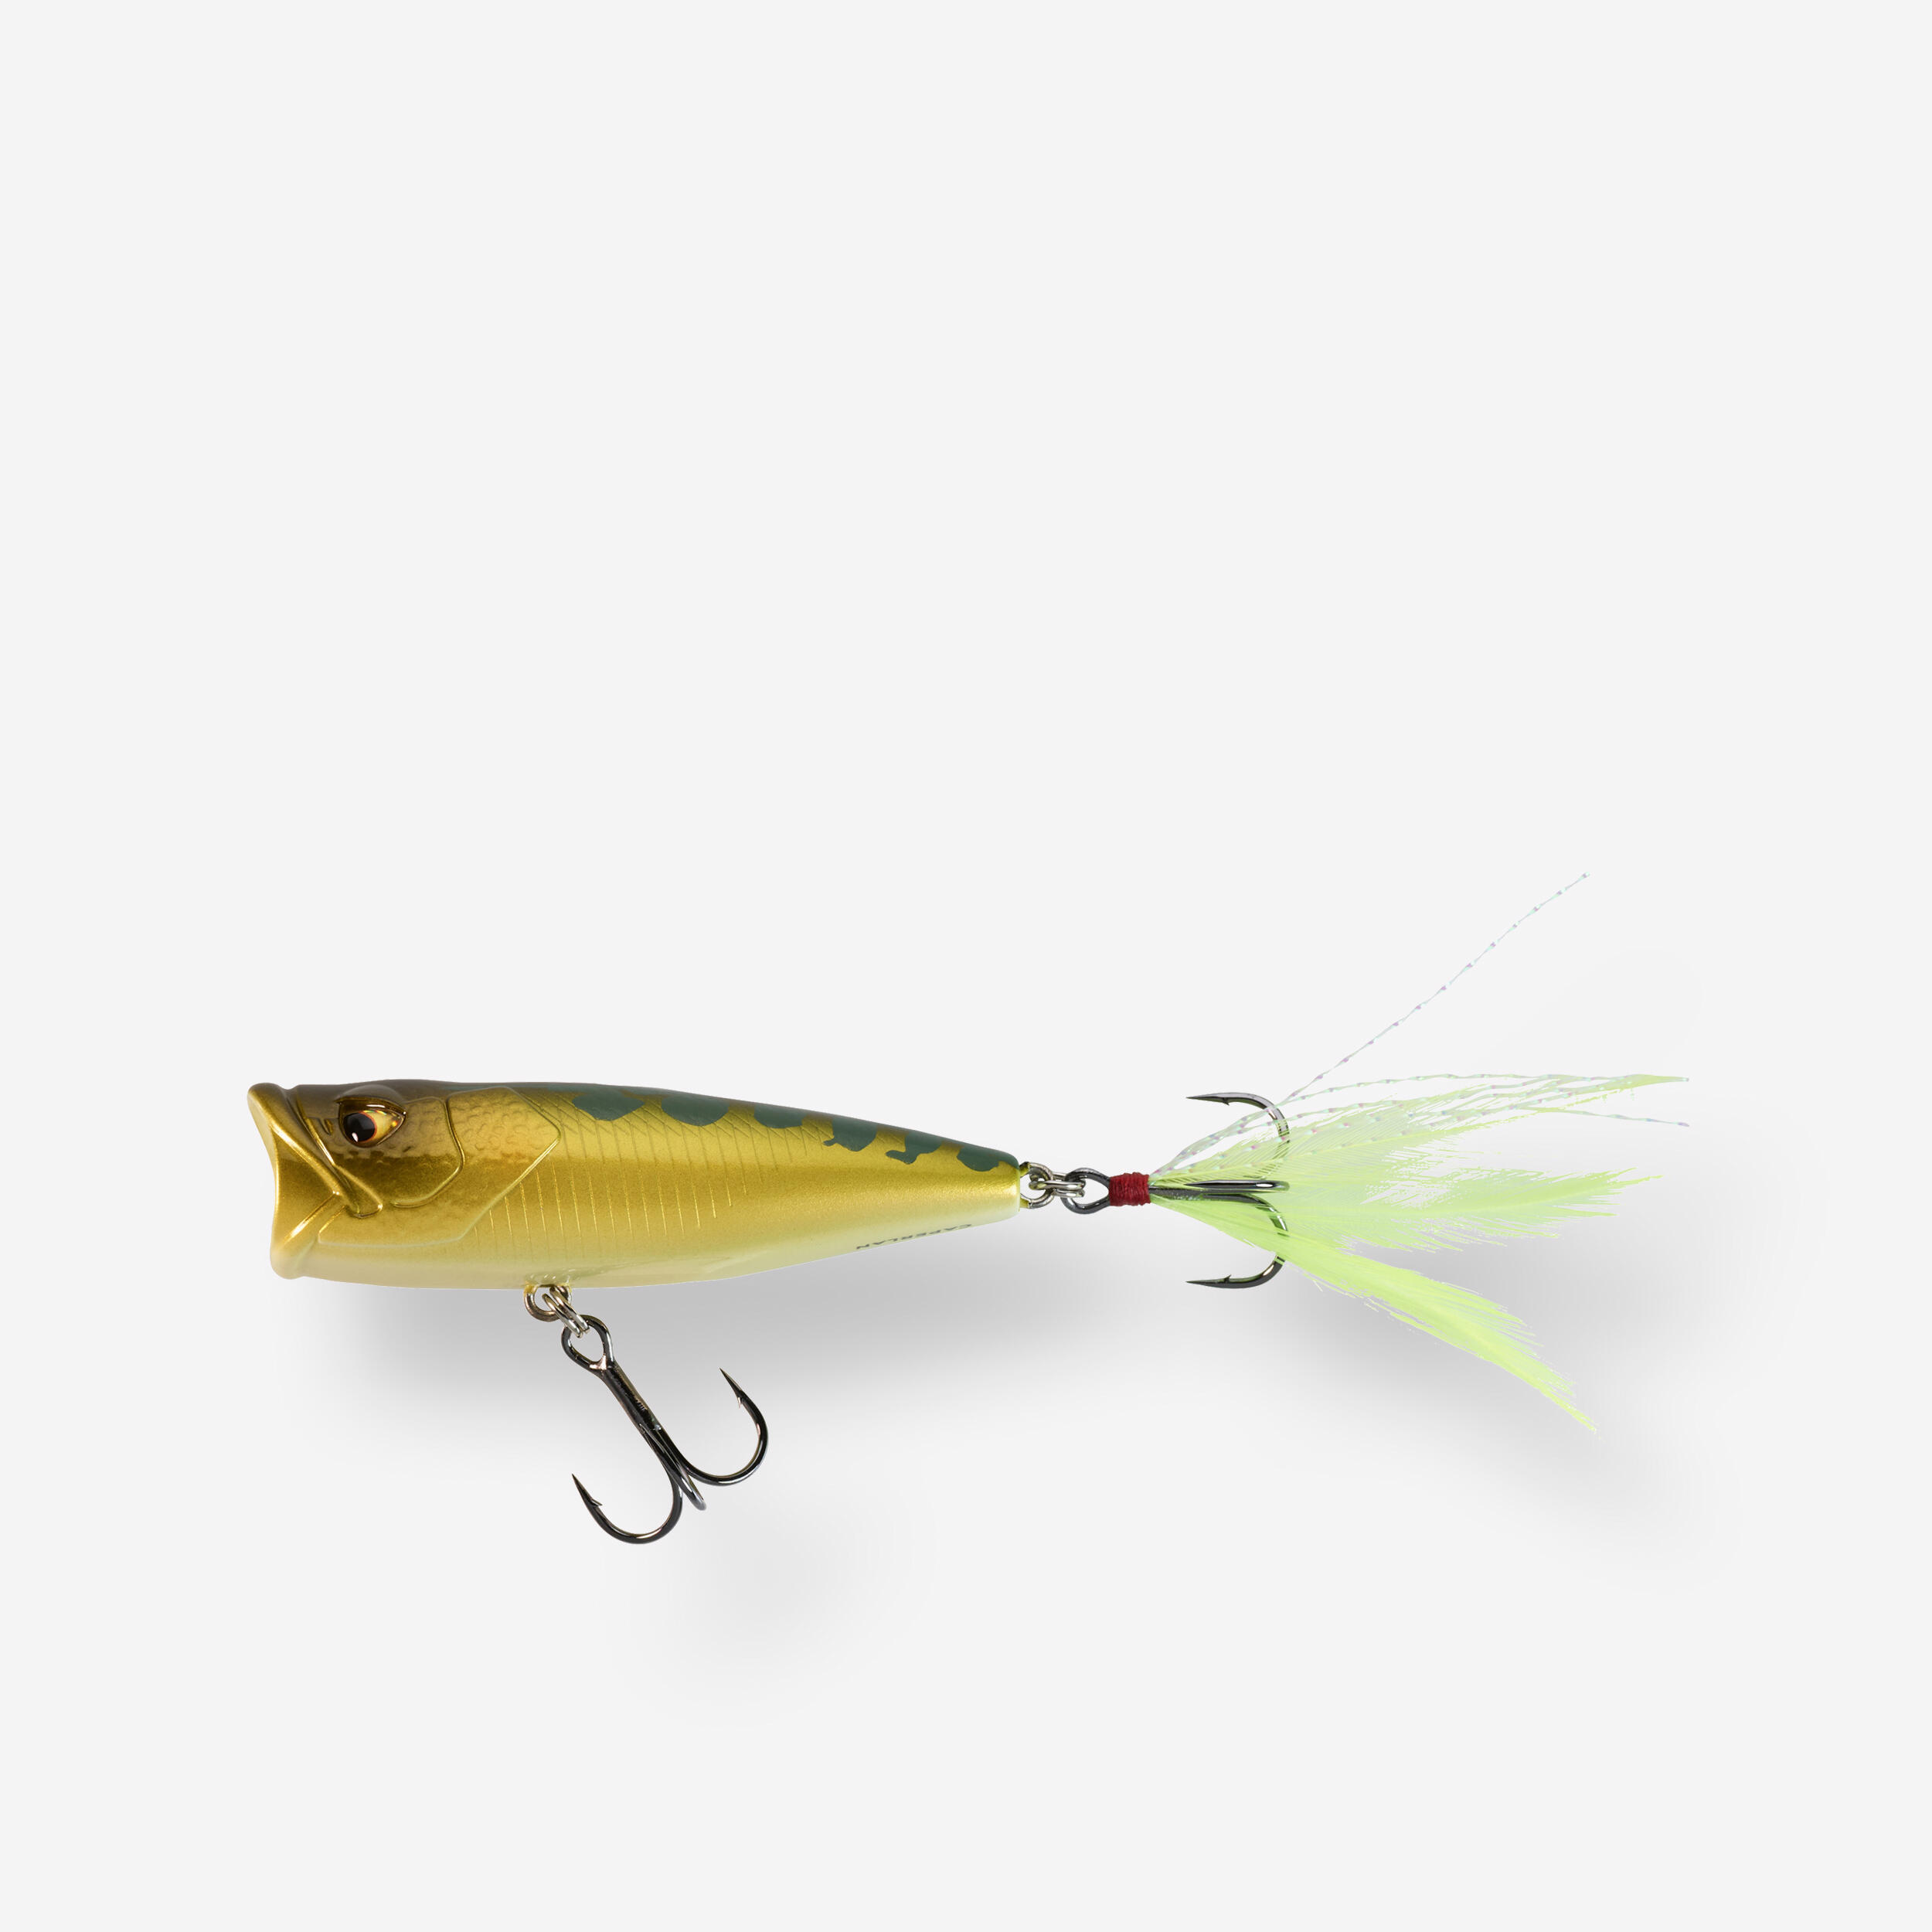 65 lure fishing popper - Hazelnut, Sunset yellow - Caperlan